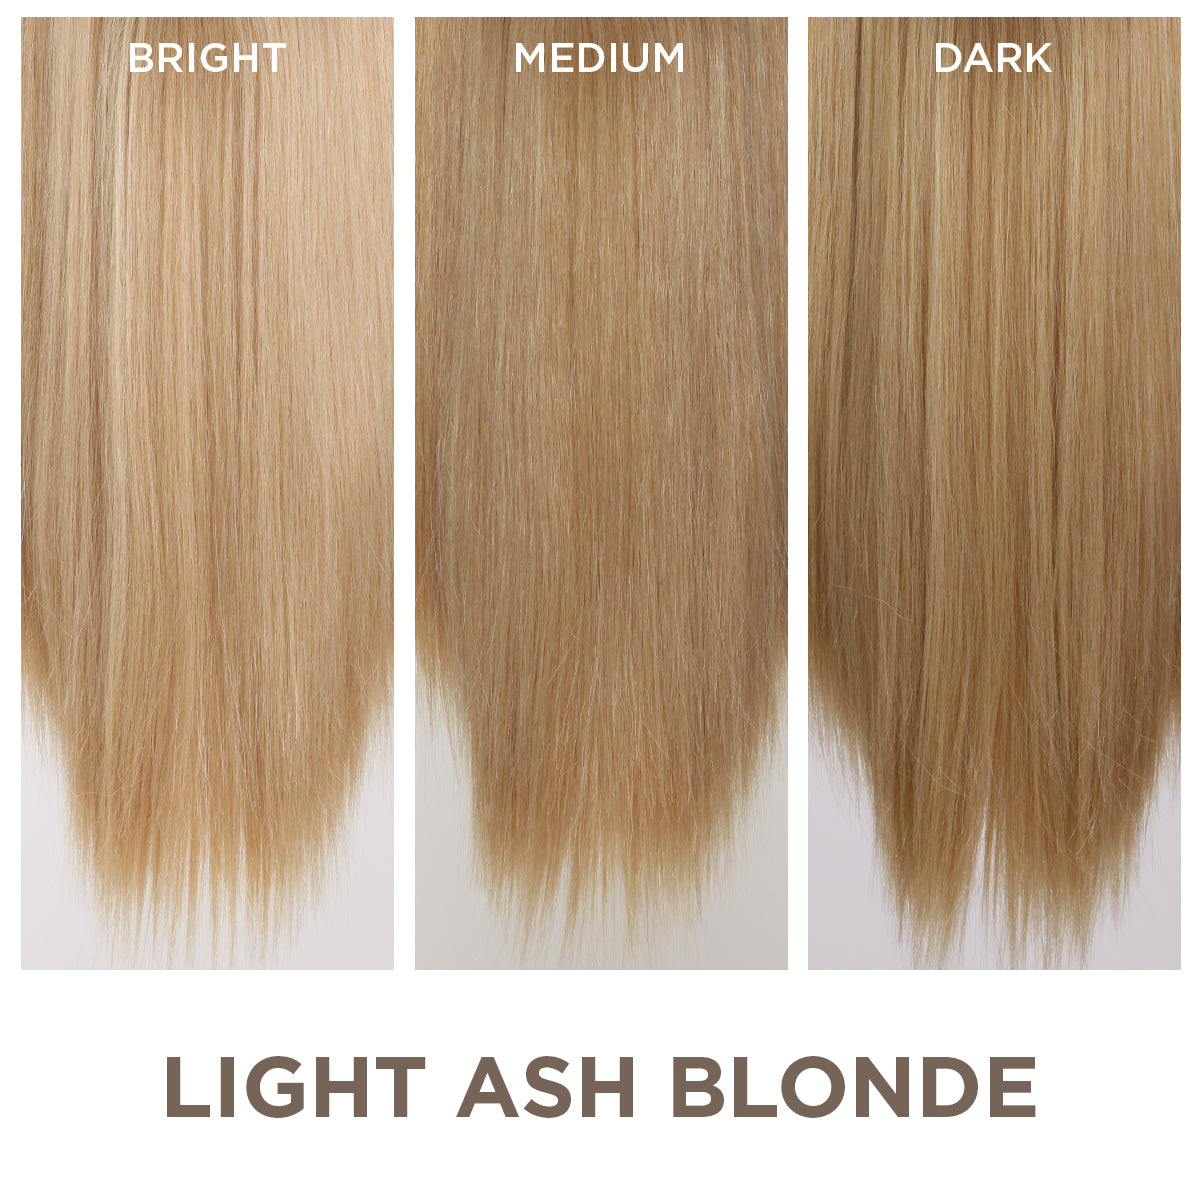 Light Ash Blonde